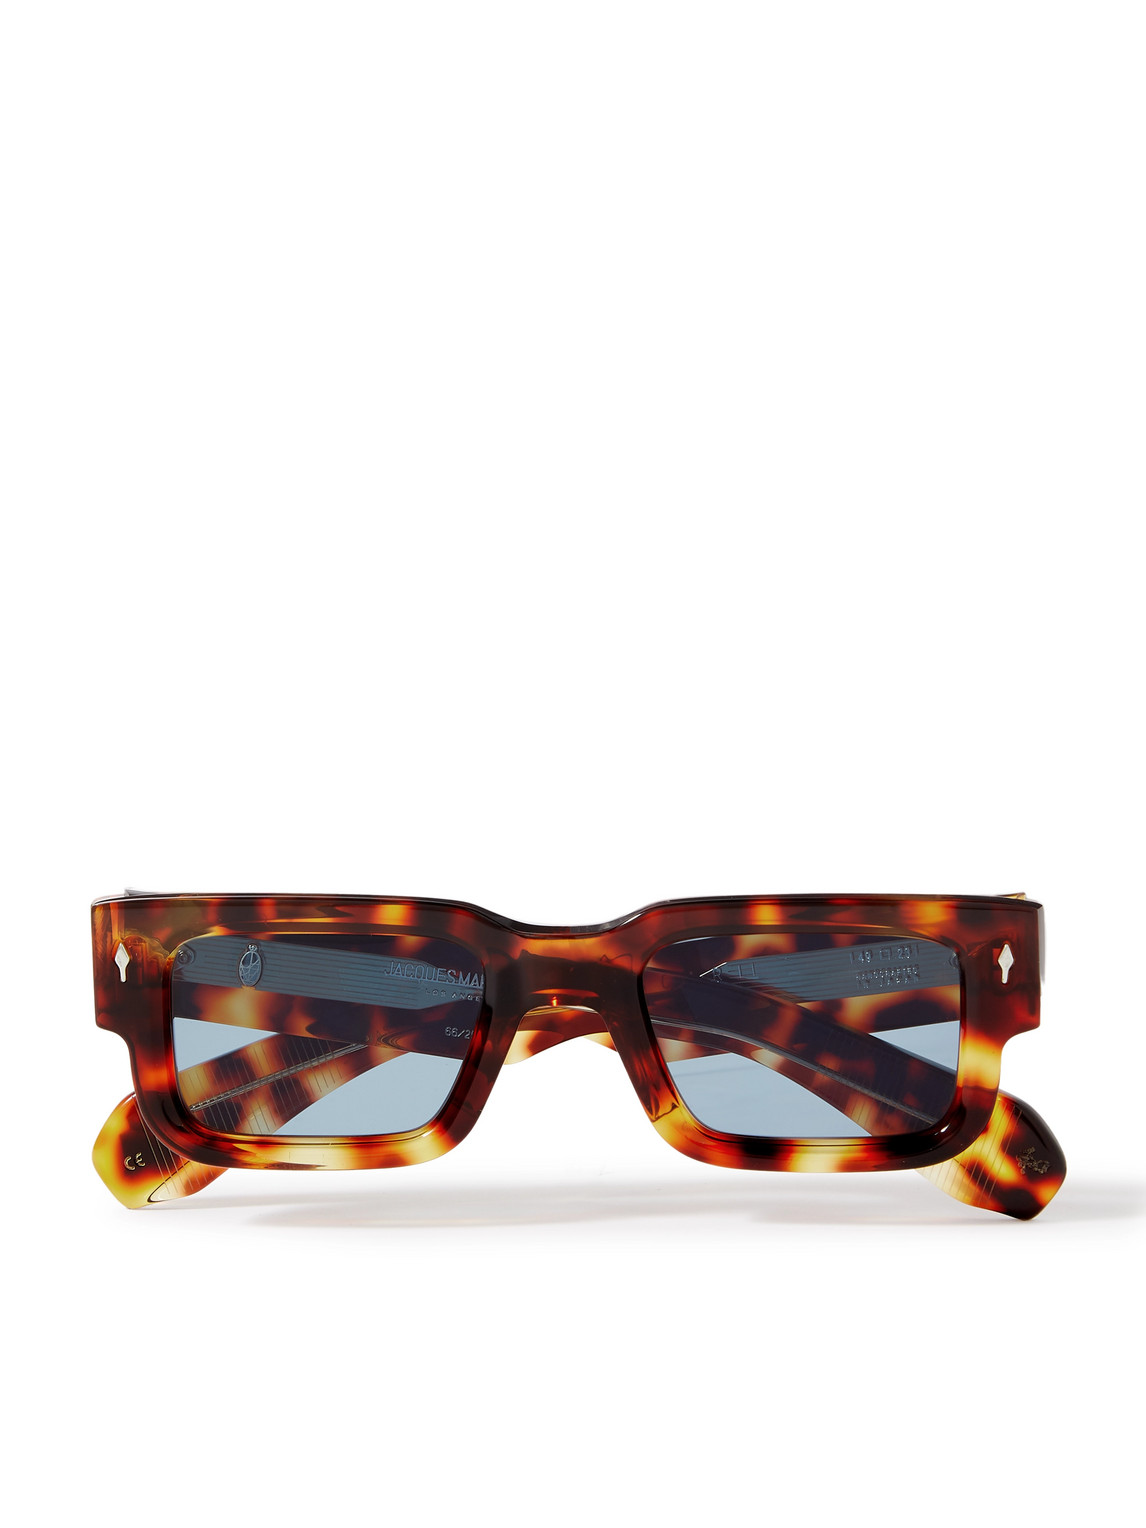 Jacques Marie Mage Ascari Square-frame Tortoiseshell Acetate Sunglasses